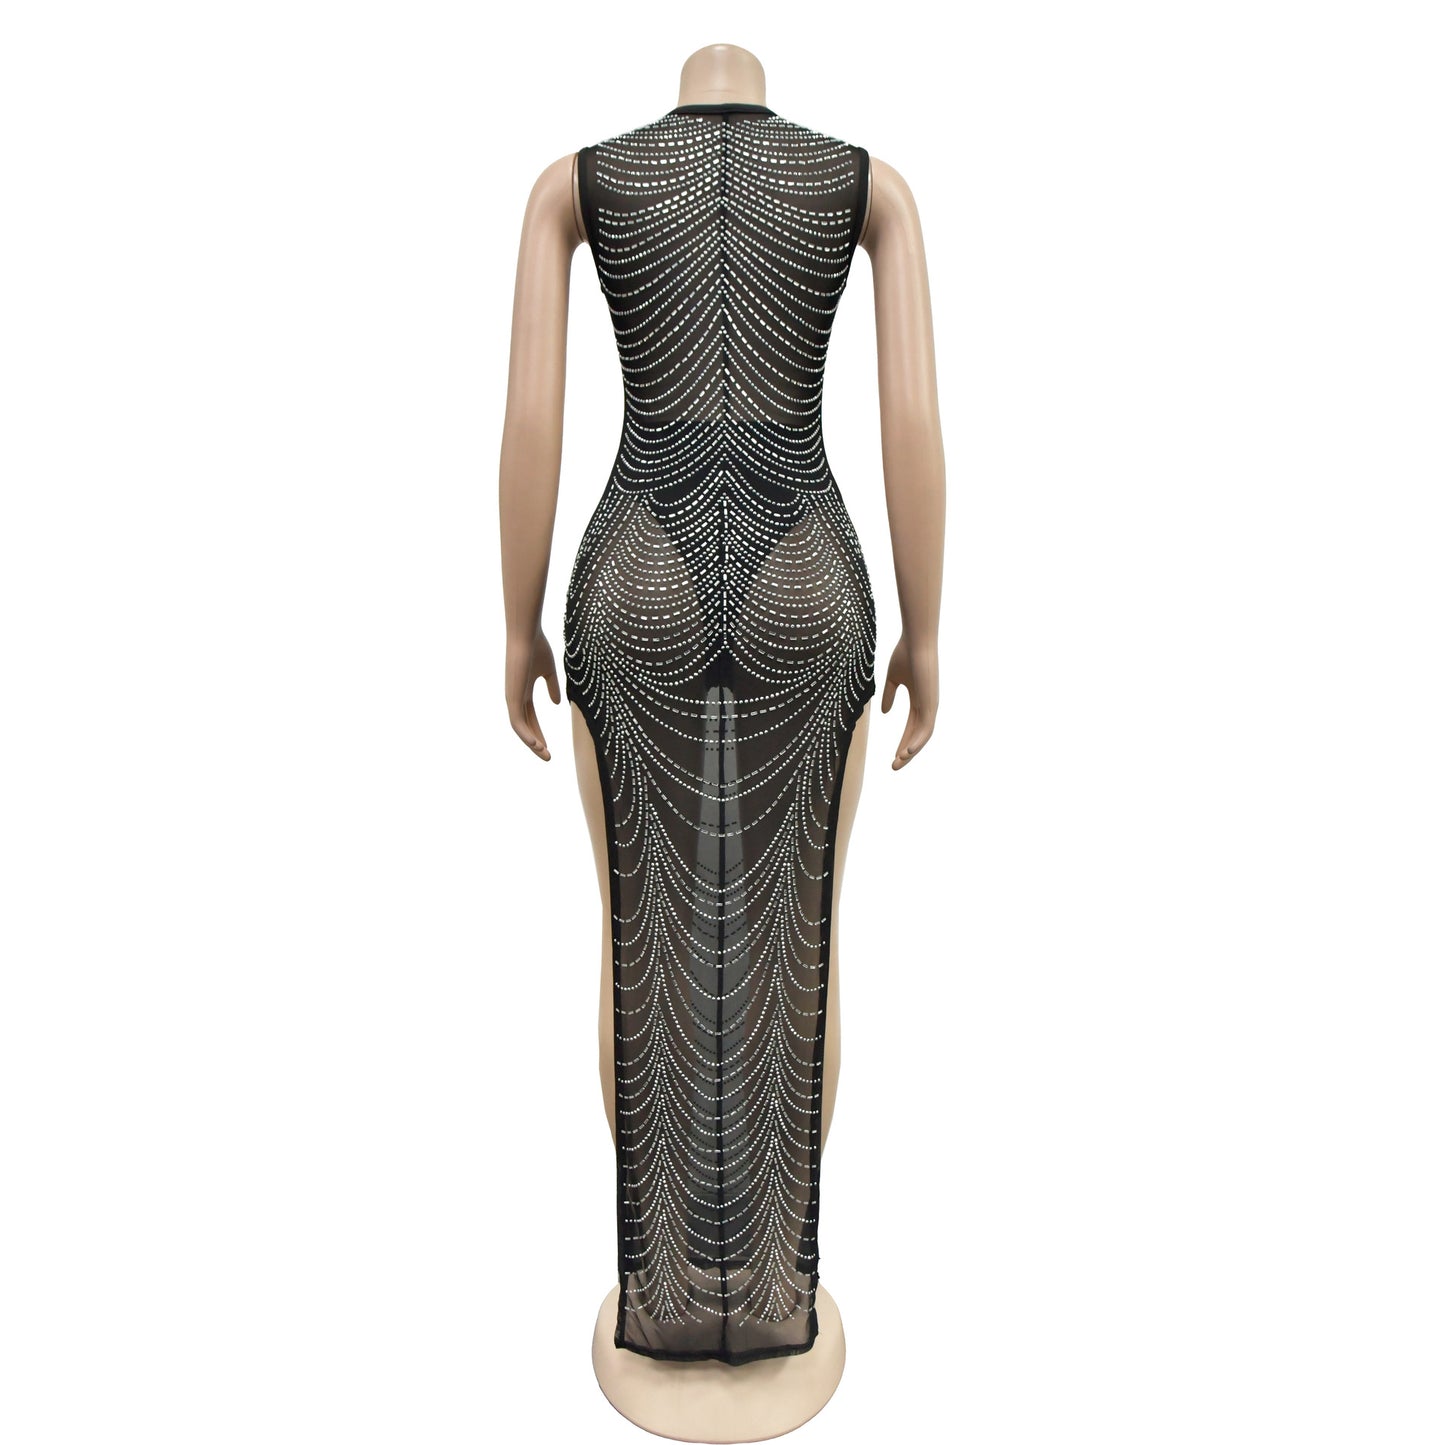 MALYBGG Mesh Rhinestone Decorated Sleeveless Long Dress 6733LY